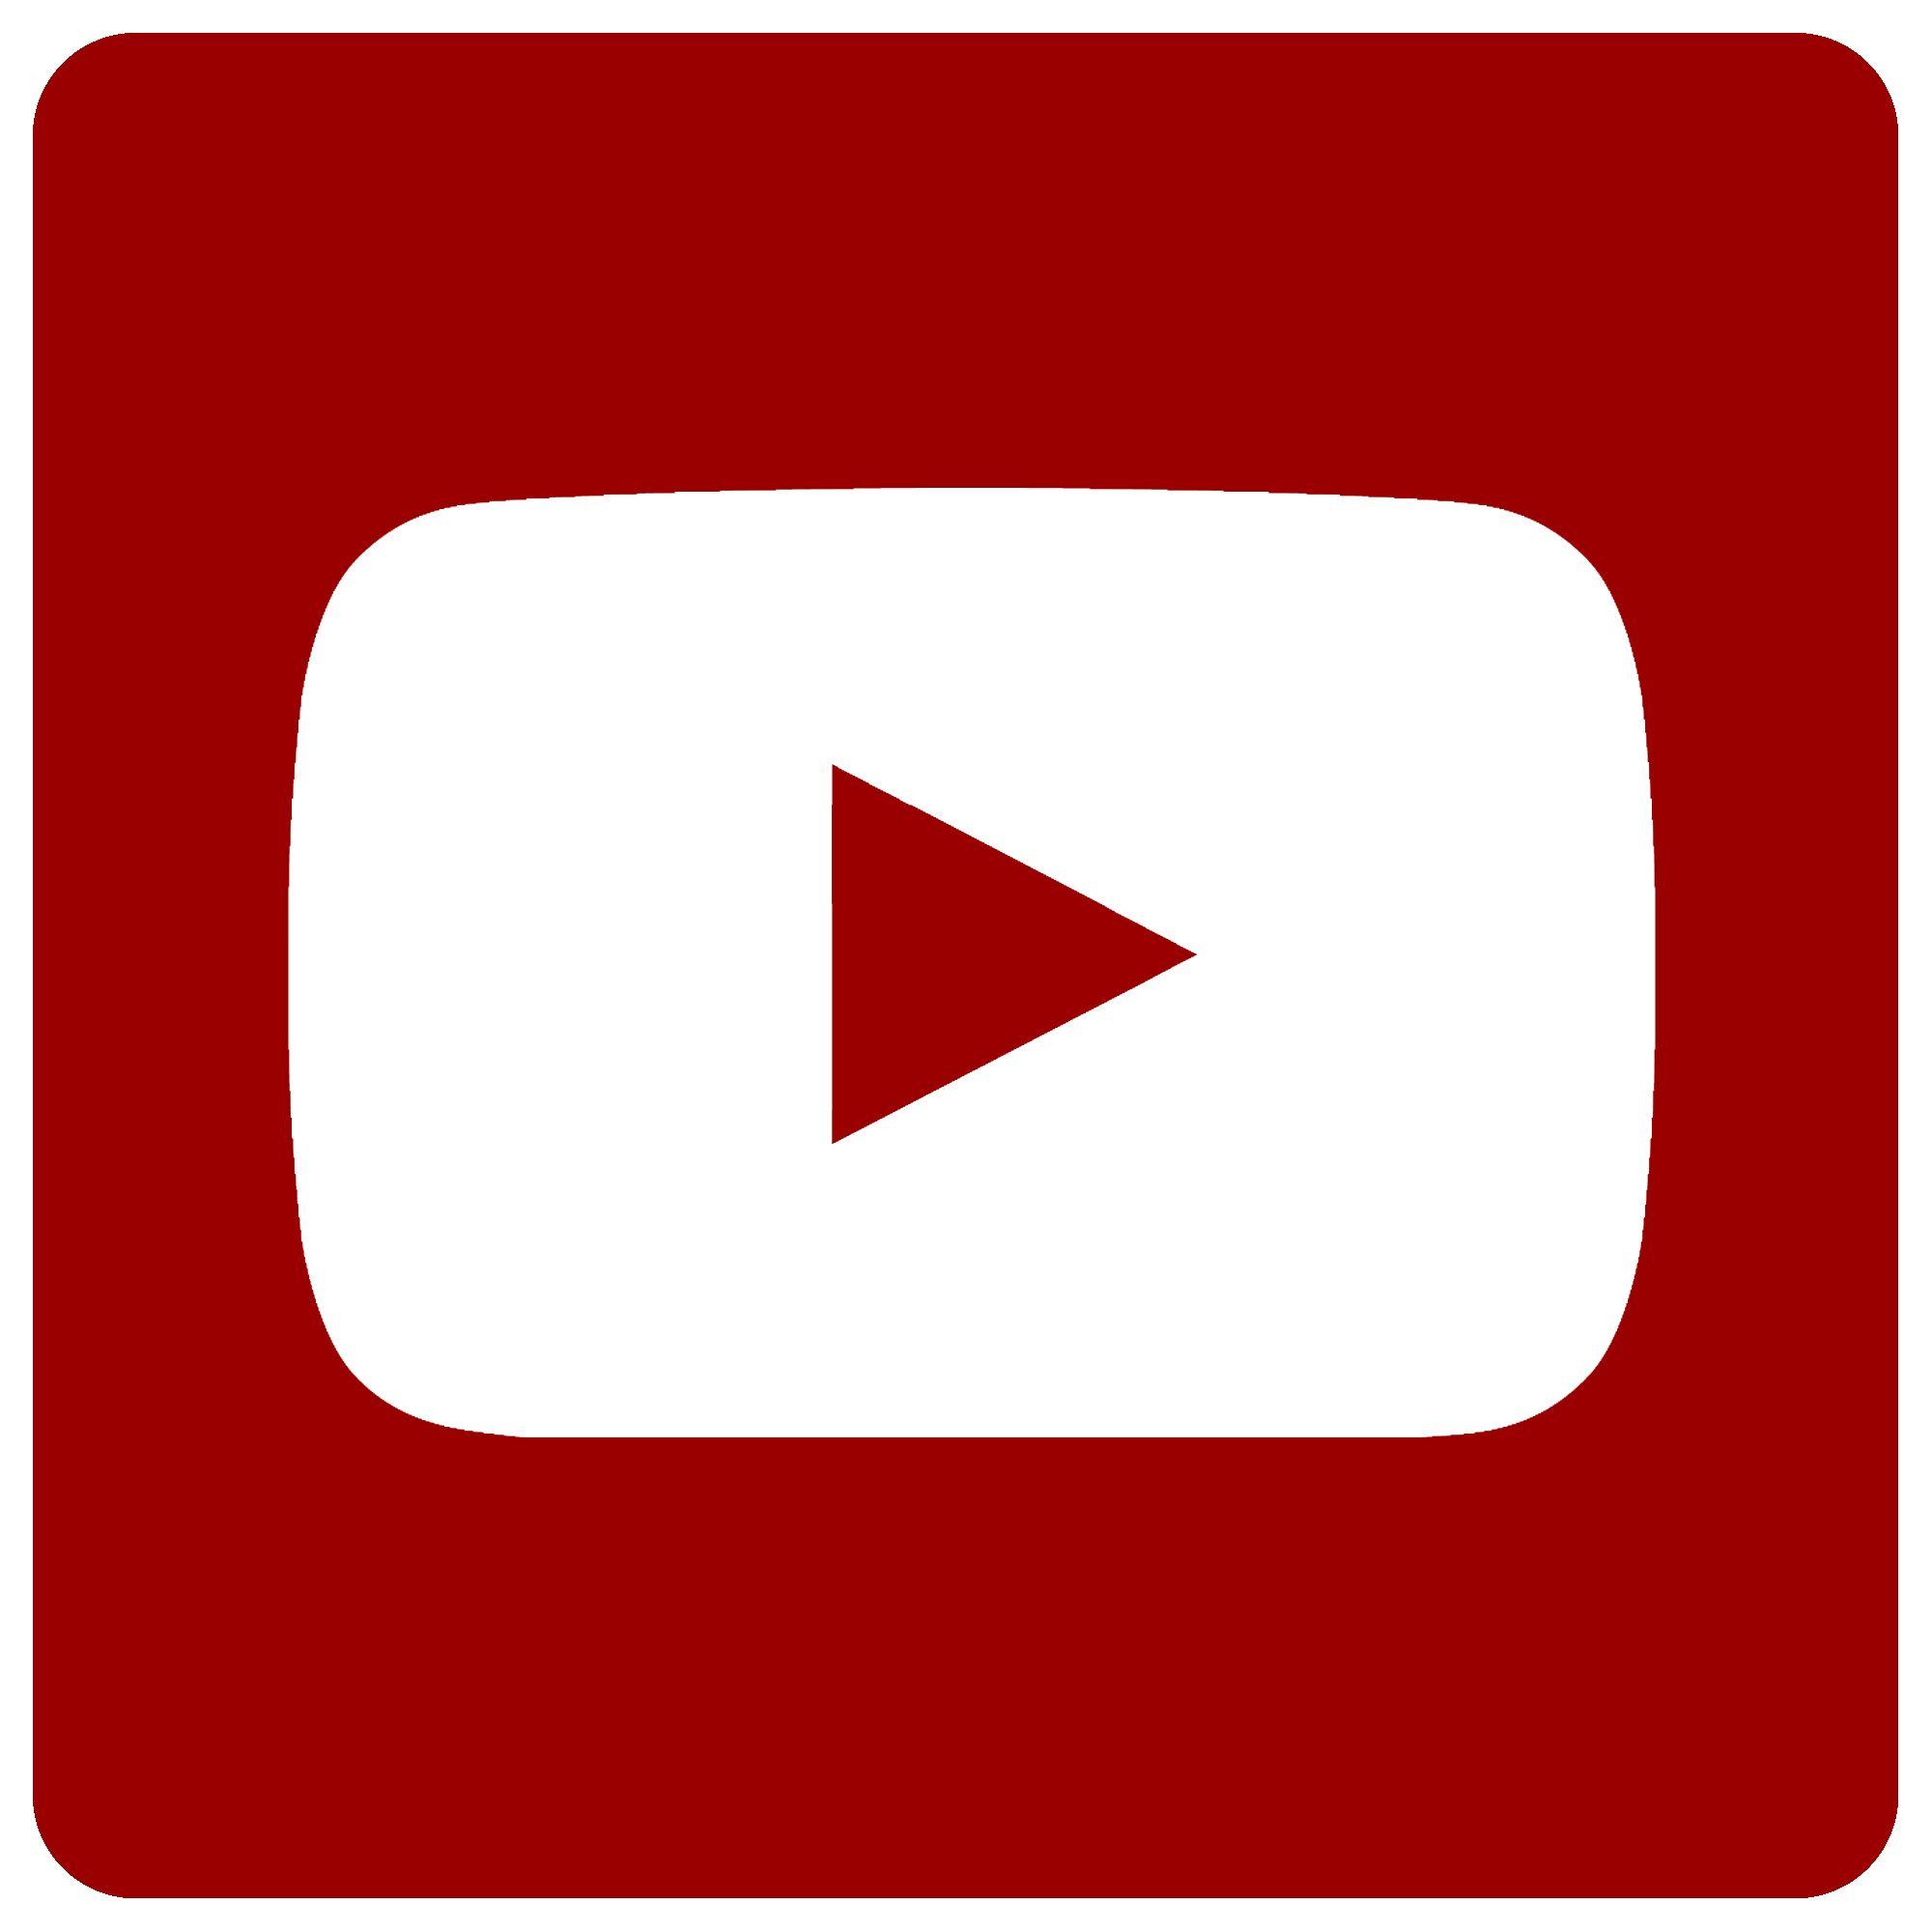 Black White Red Shape Logo - YouTube Logo, YouTube Symbol, Meaning, History and Evolution